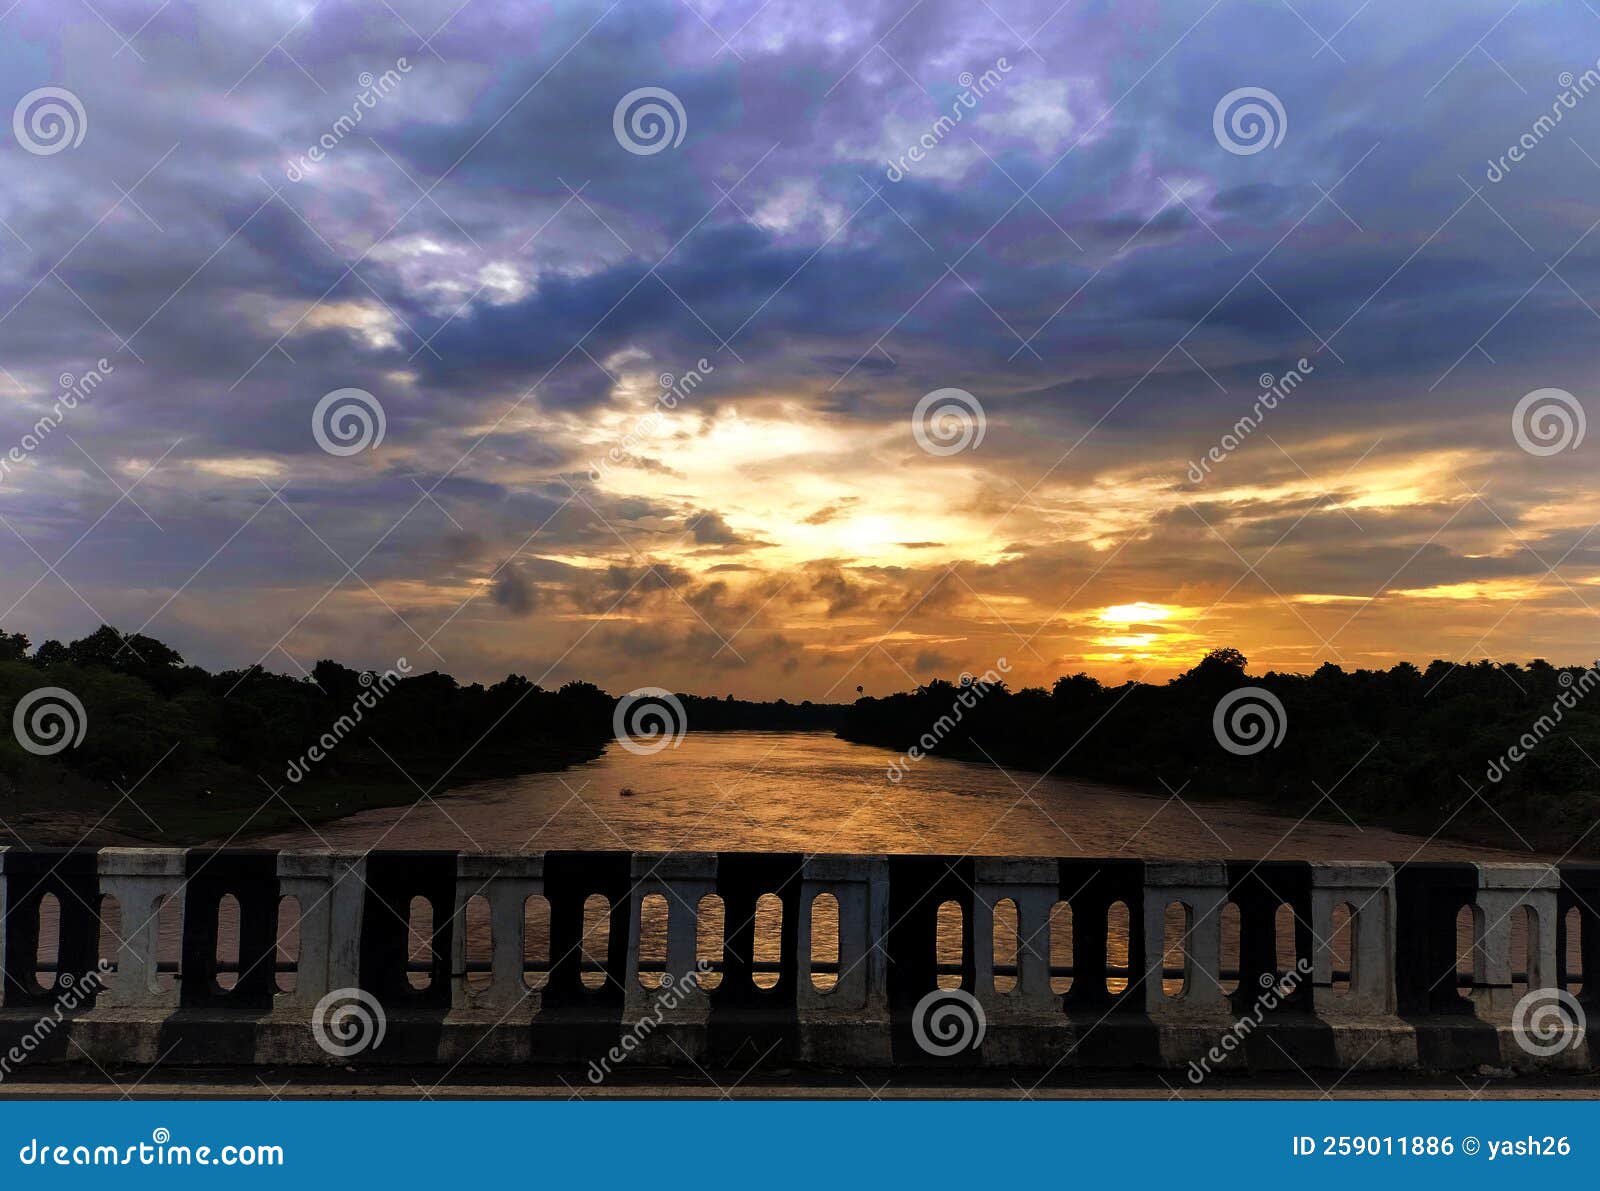 river-side sunset rainyday nature